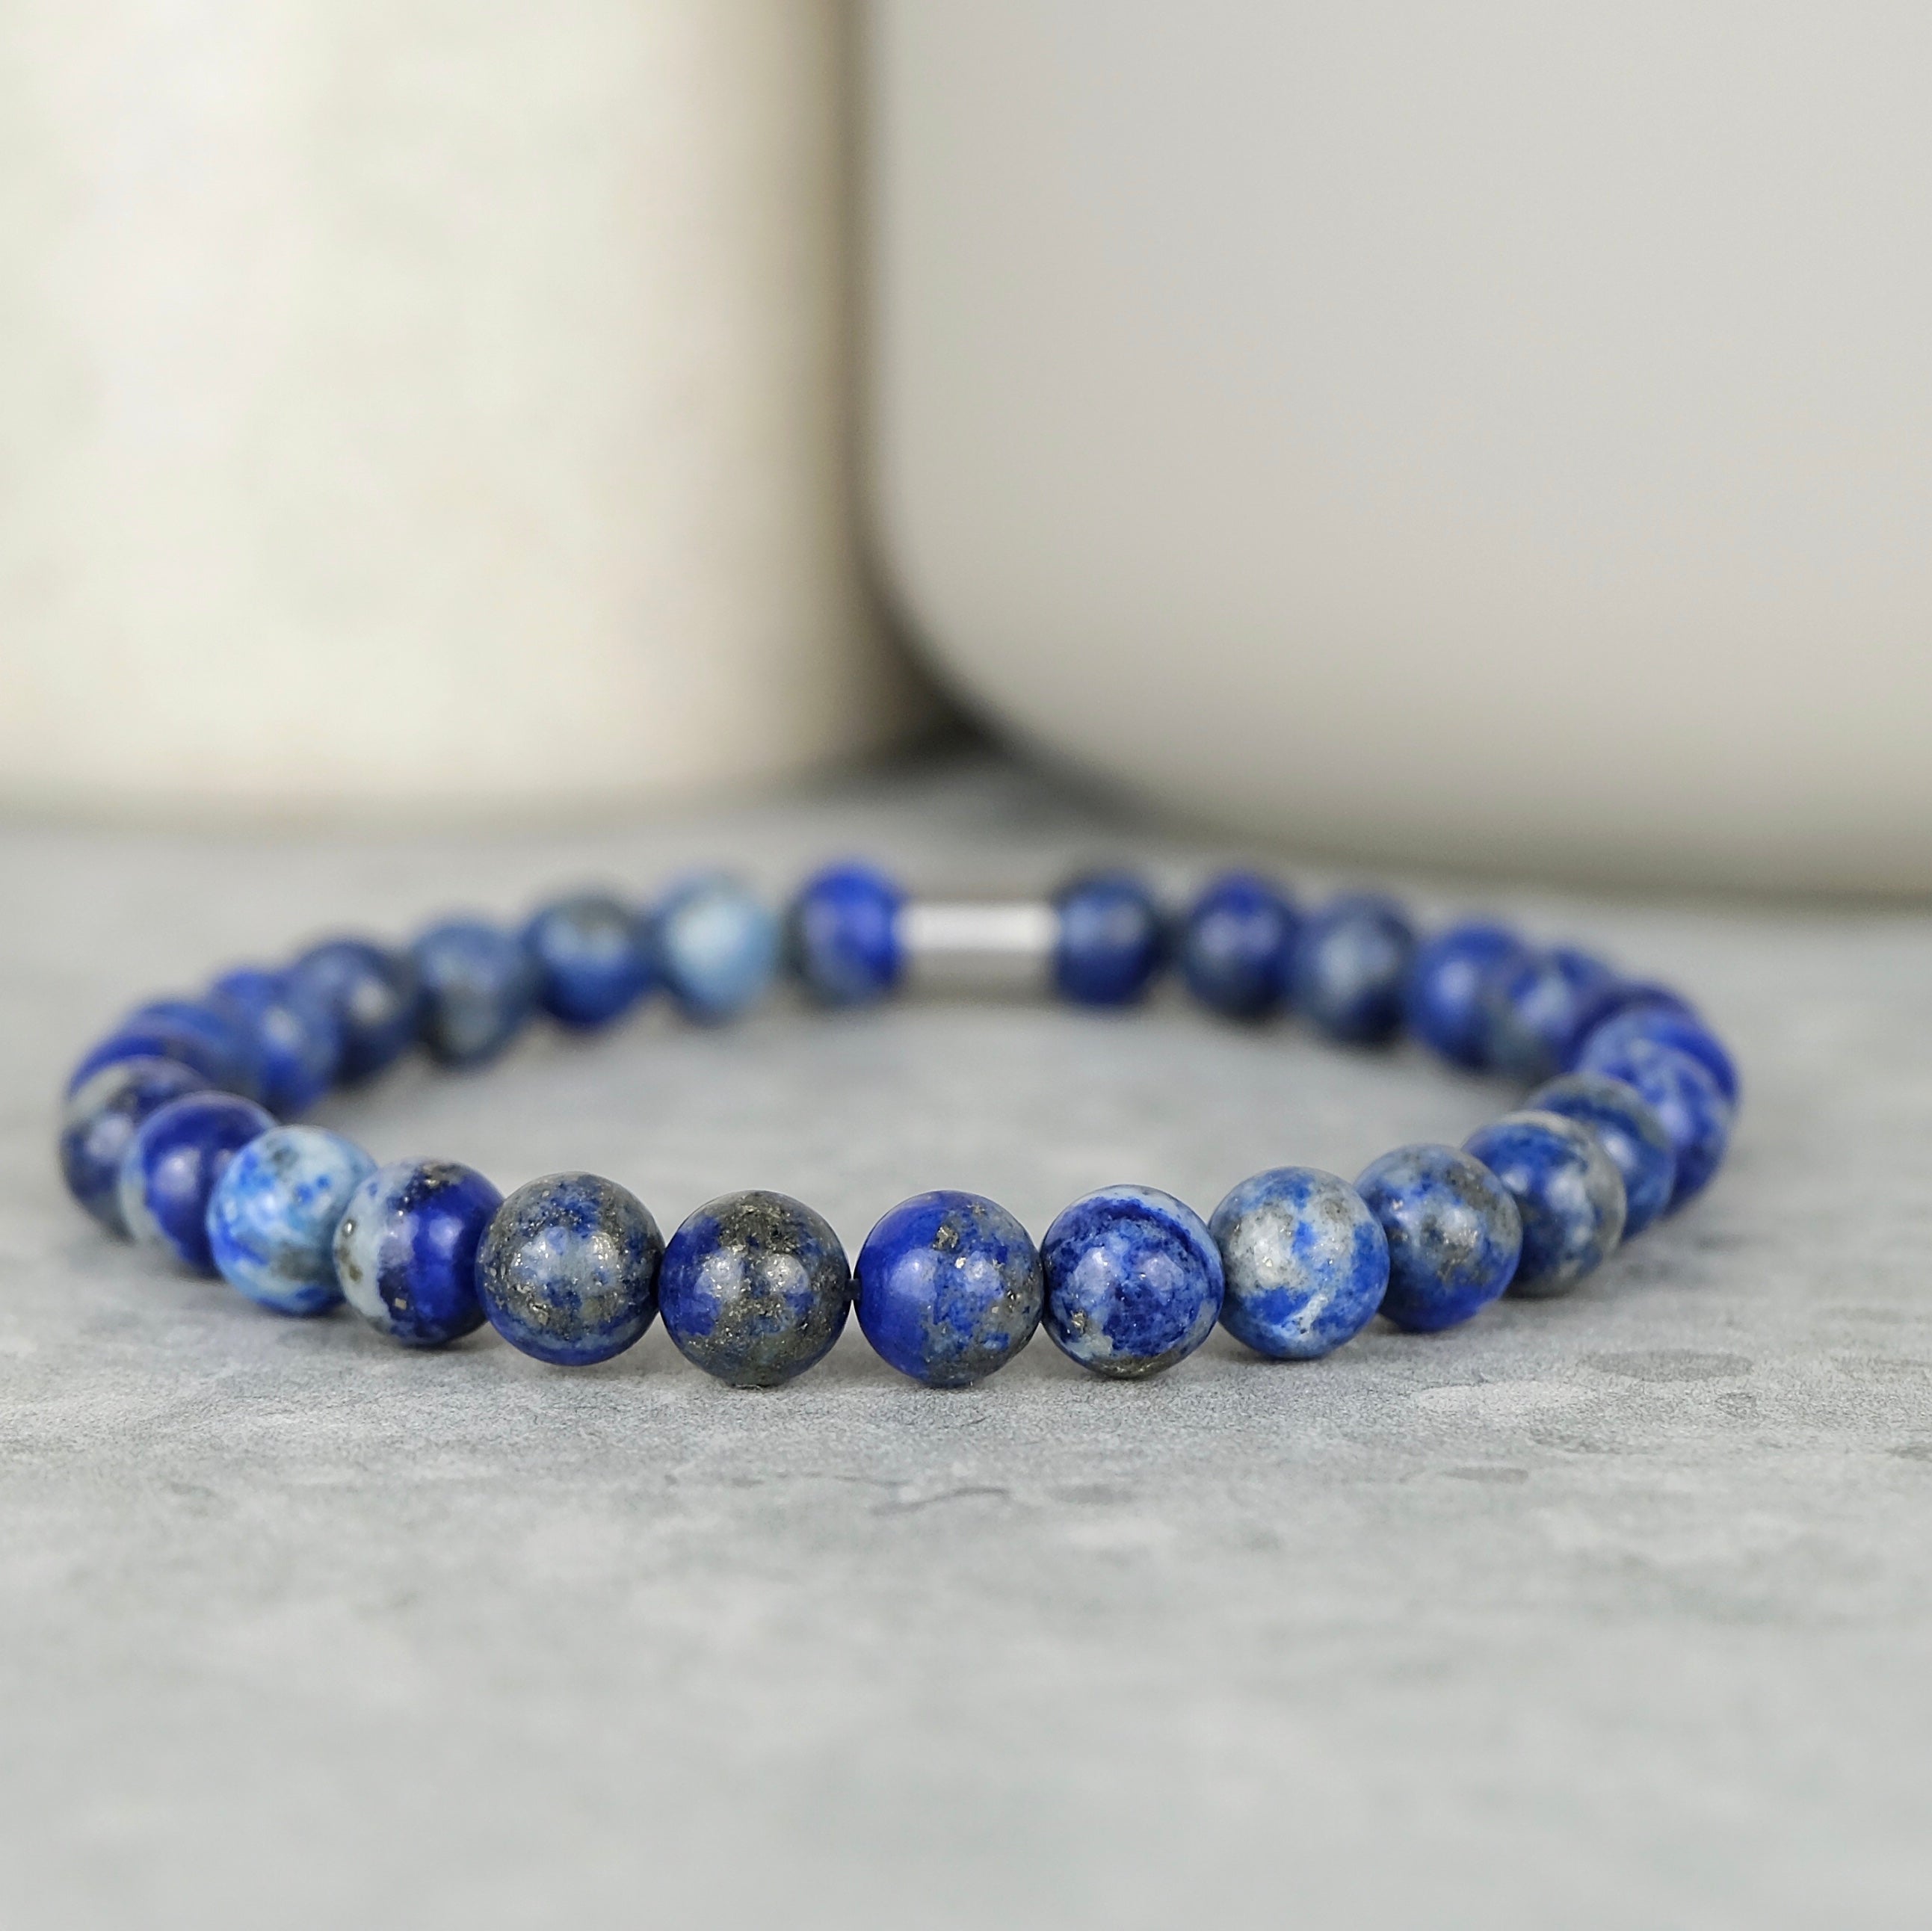 Lapis lazuli gemstone bracelet in 6mm beads with steel accessory